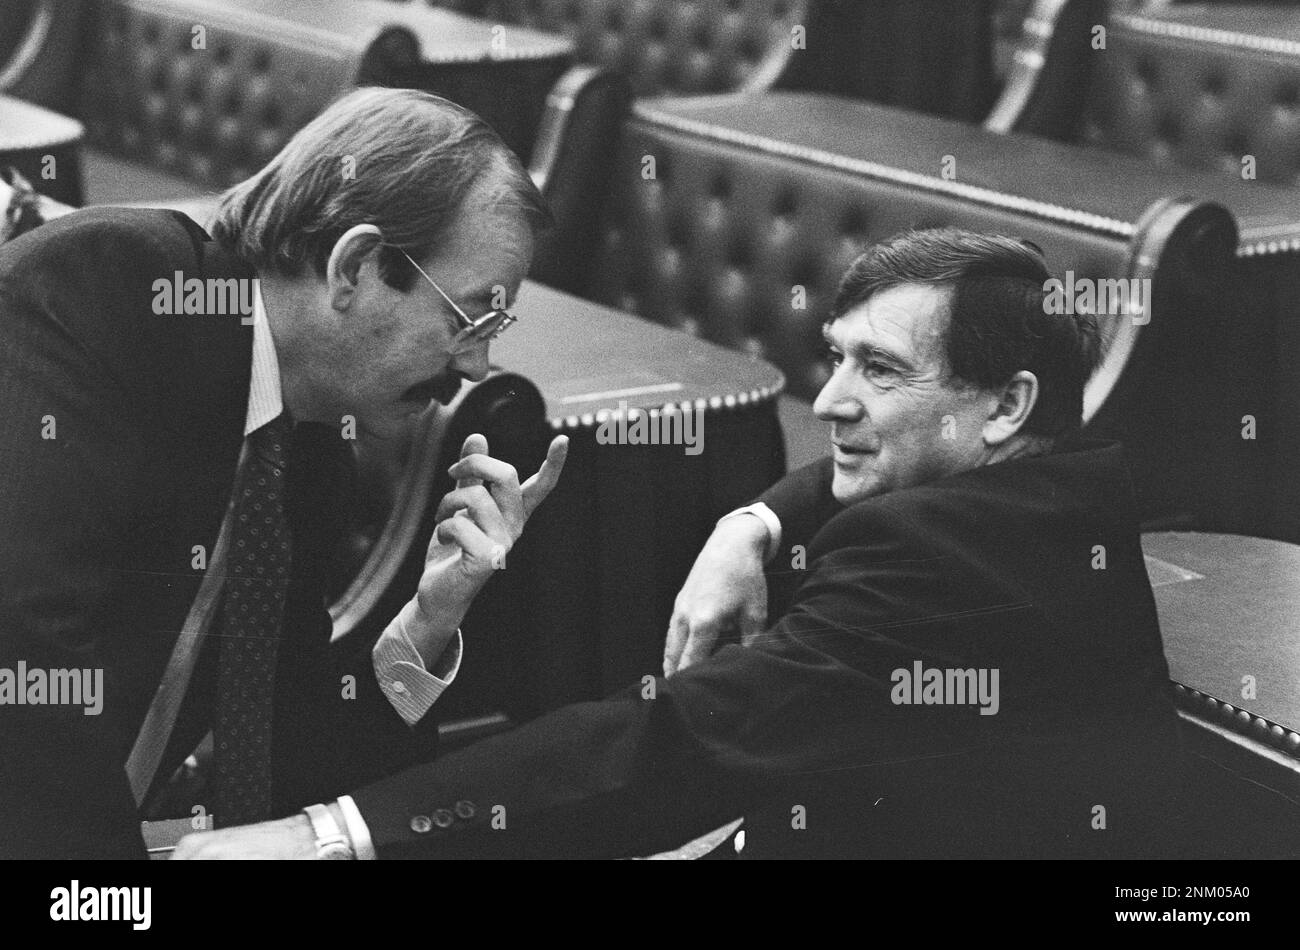 House of Representatives, debate on Strategic Defense Initiative (Star Wars), Relus ter Beek (l) and Joep de Boer ca. 1985 Stock Photo